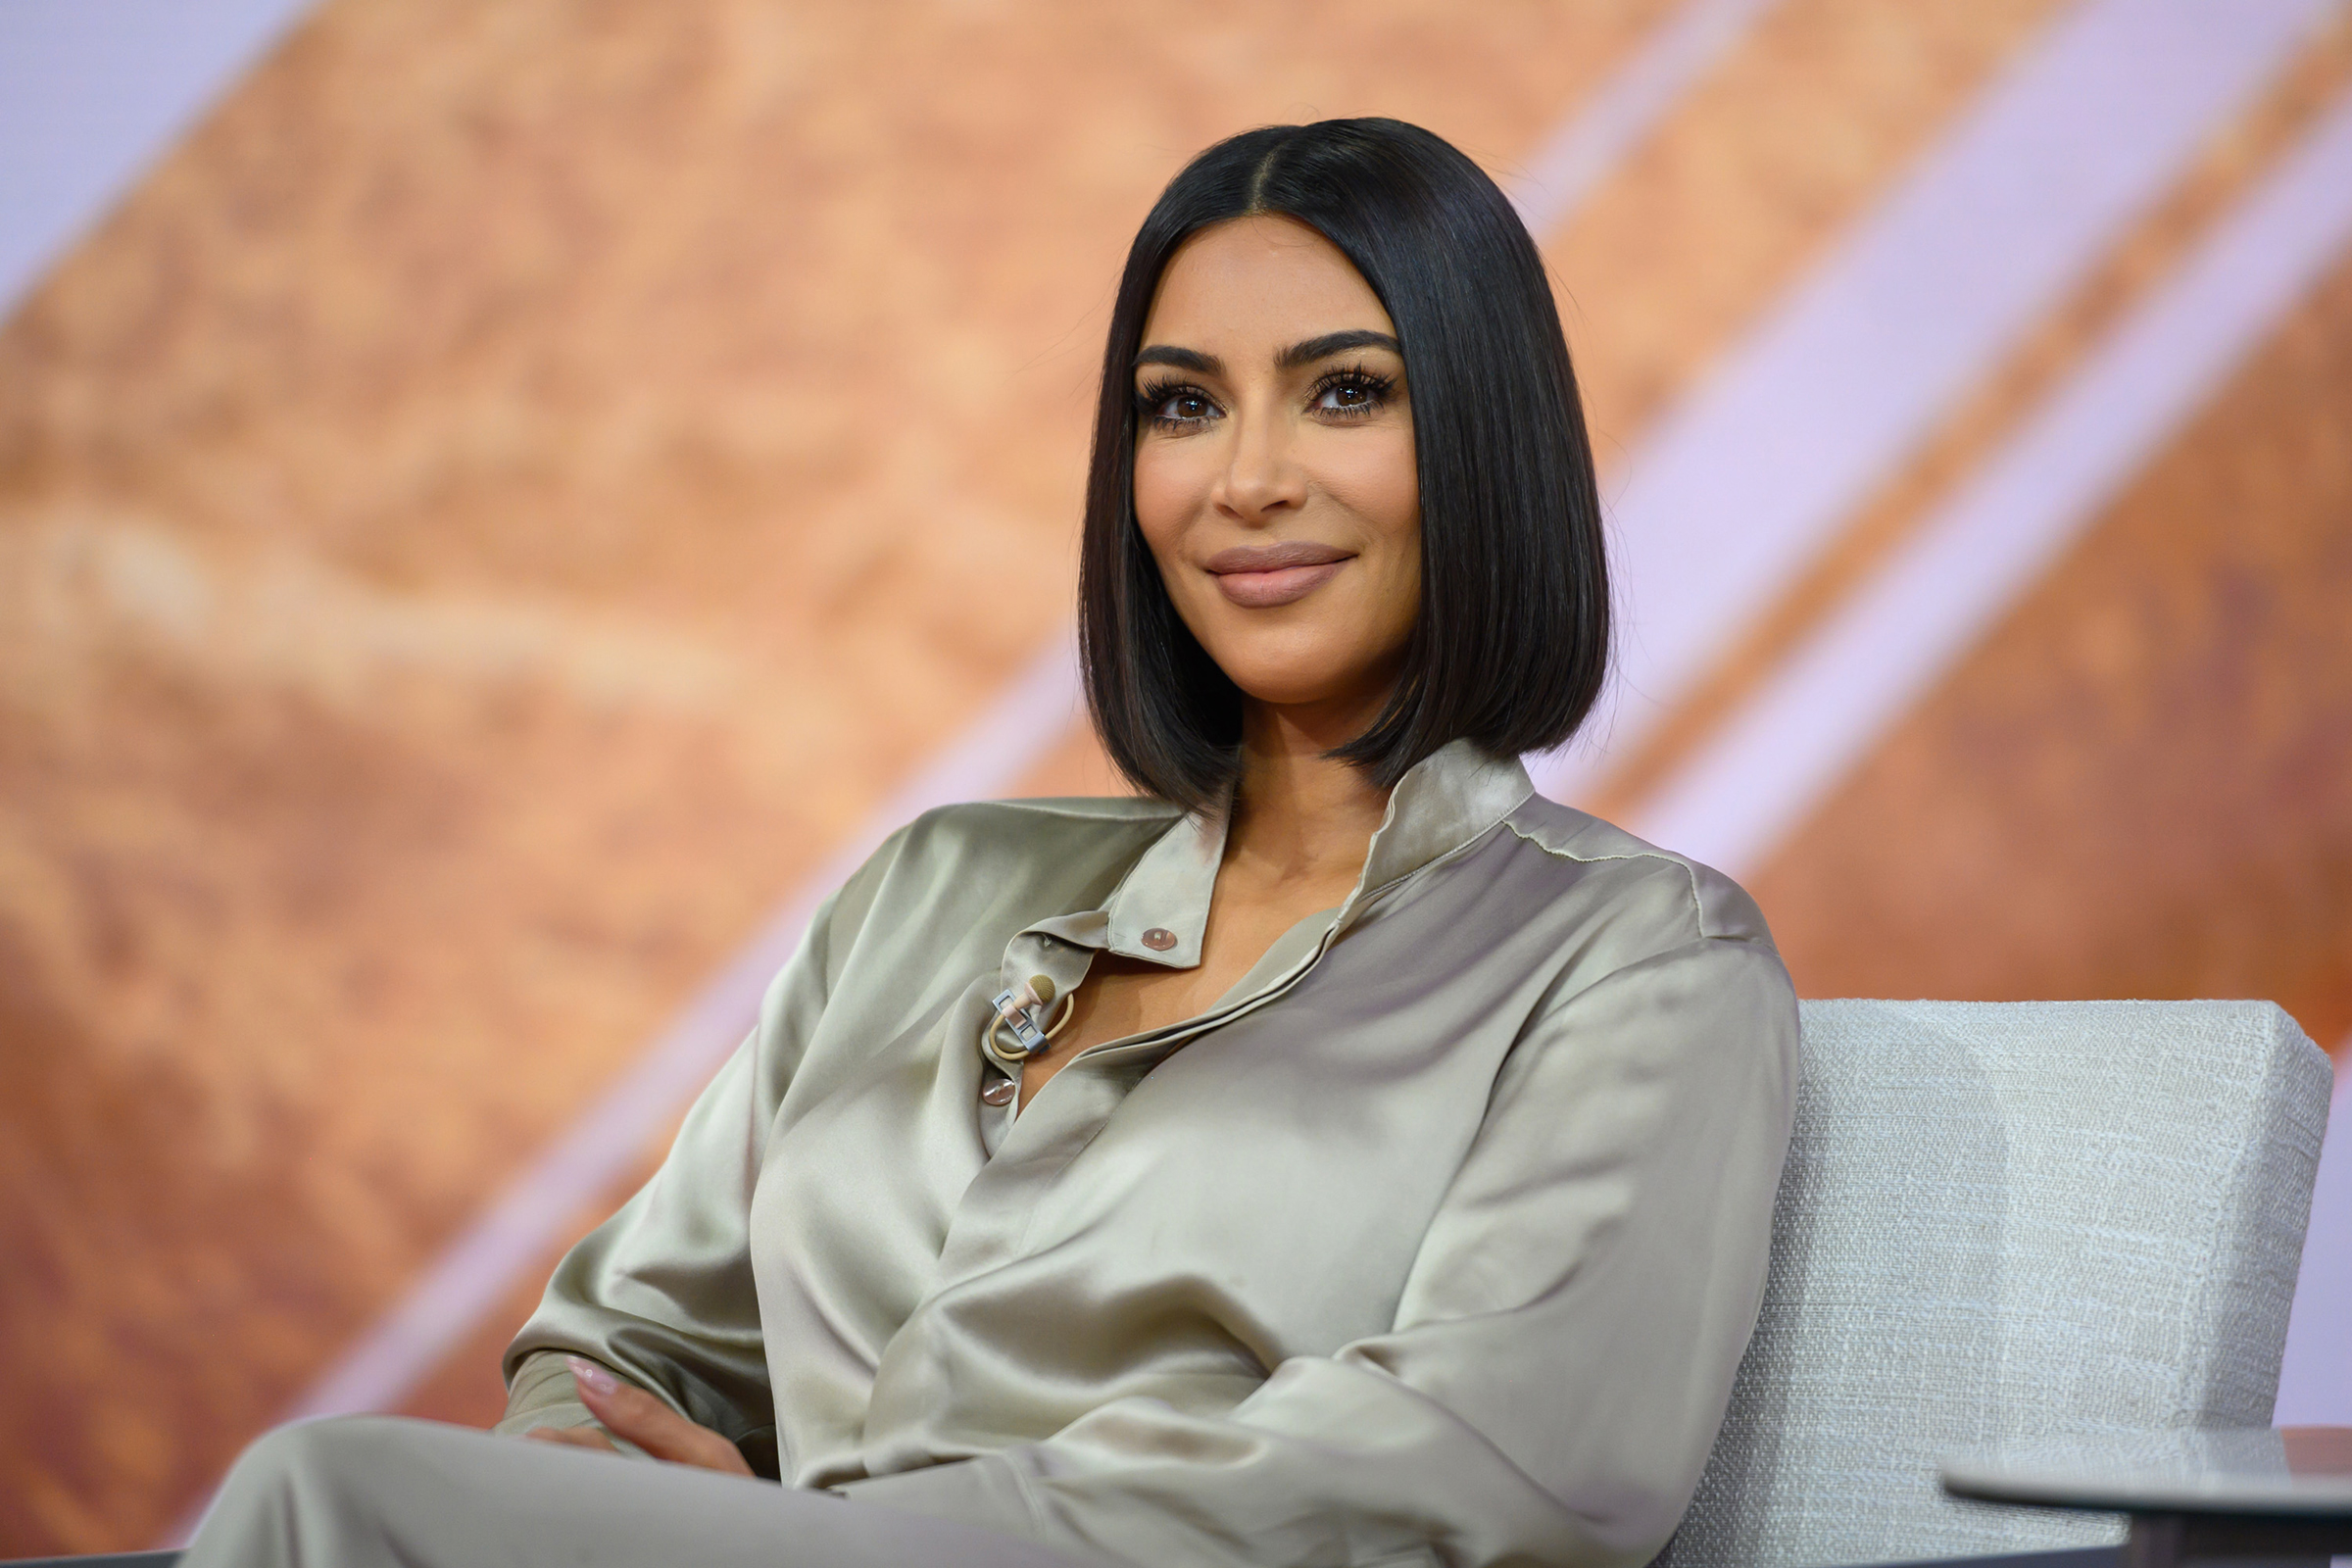 SKIMS founder Kim Kardashian West. (NBCUniversa/Getty Images)